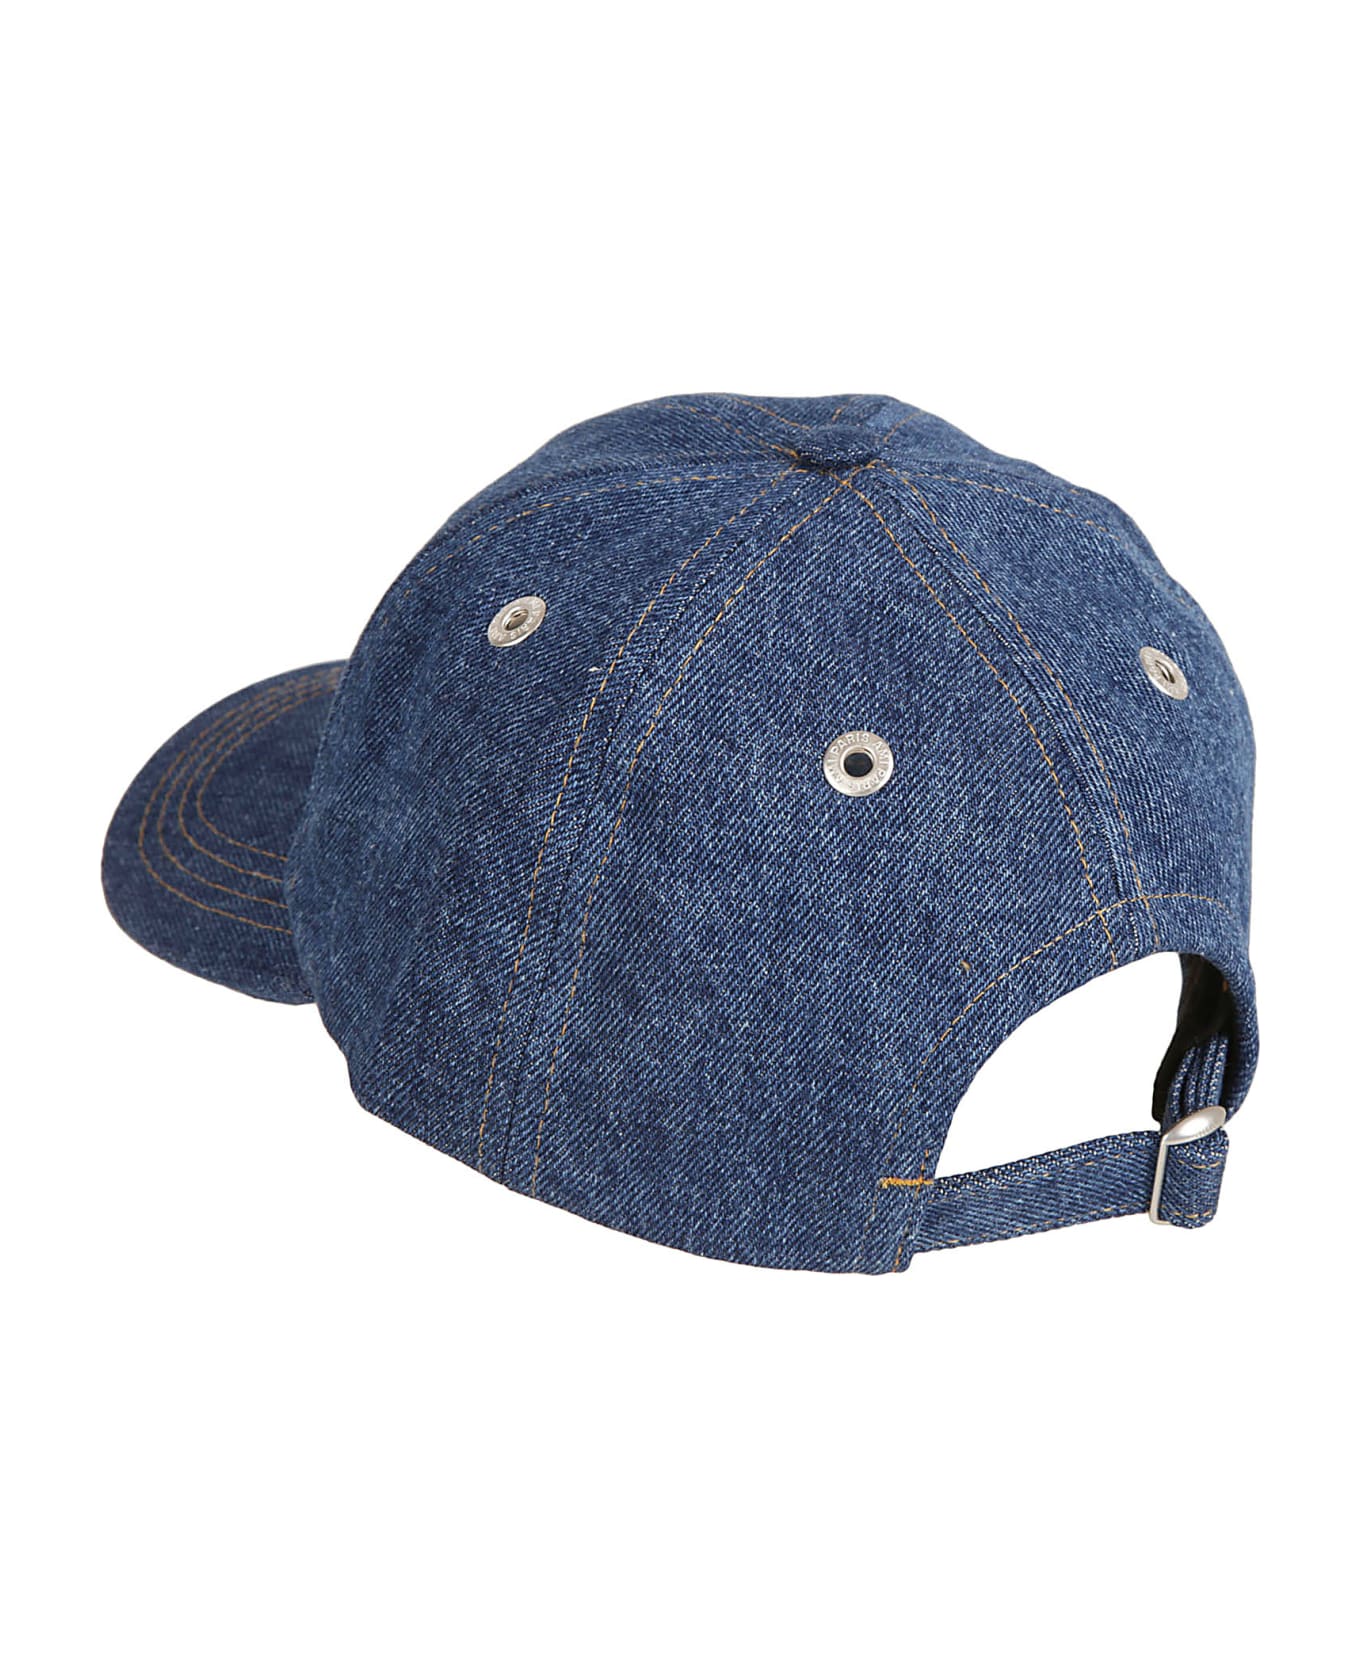 Ami Alexandre Mattiussi Adc Embroidery Cap - Used Blue 帽子